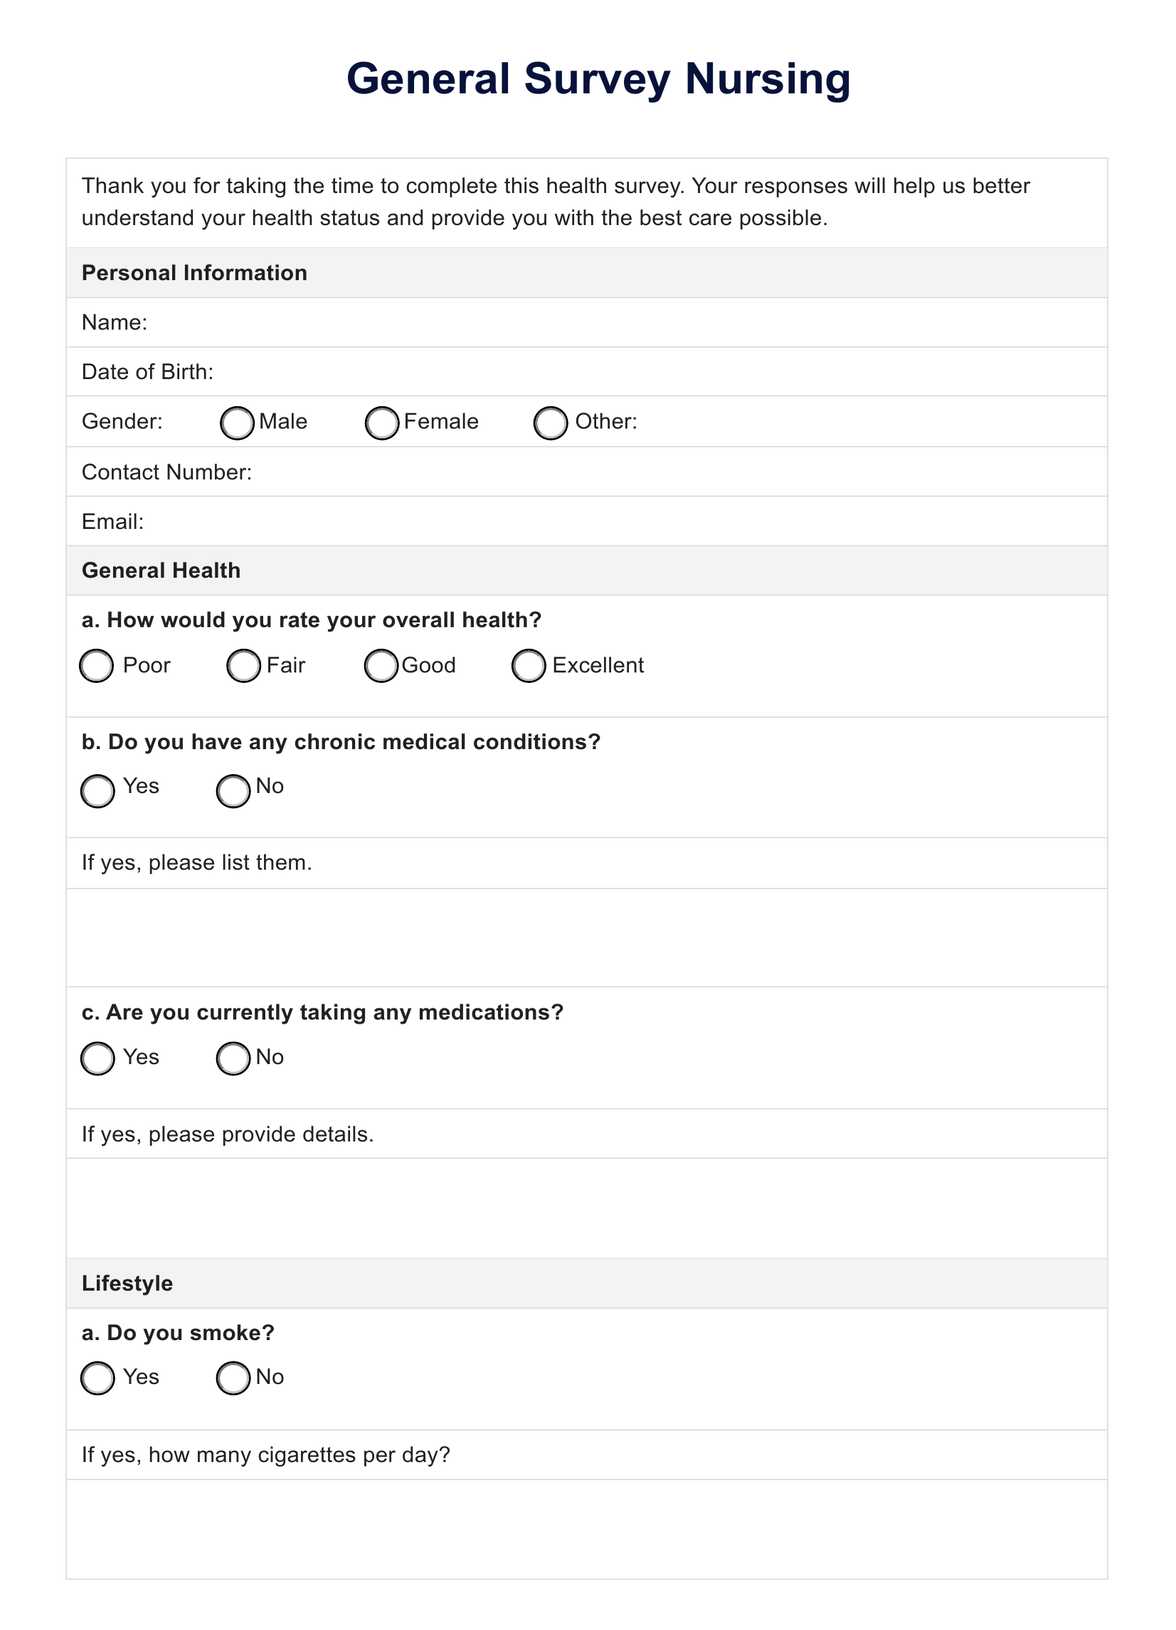 General Survey Nursing PDF Example